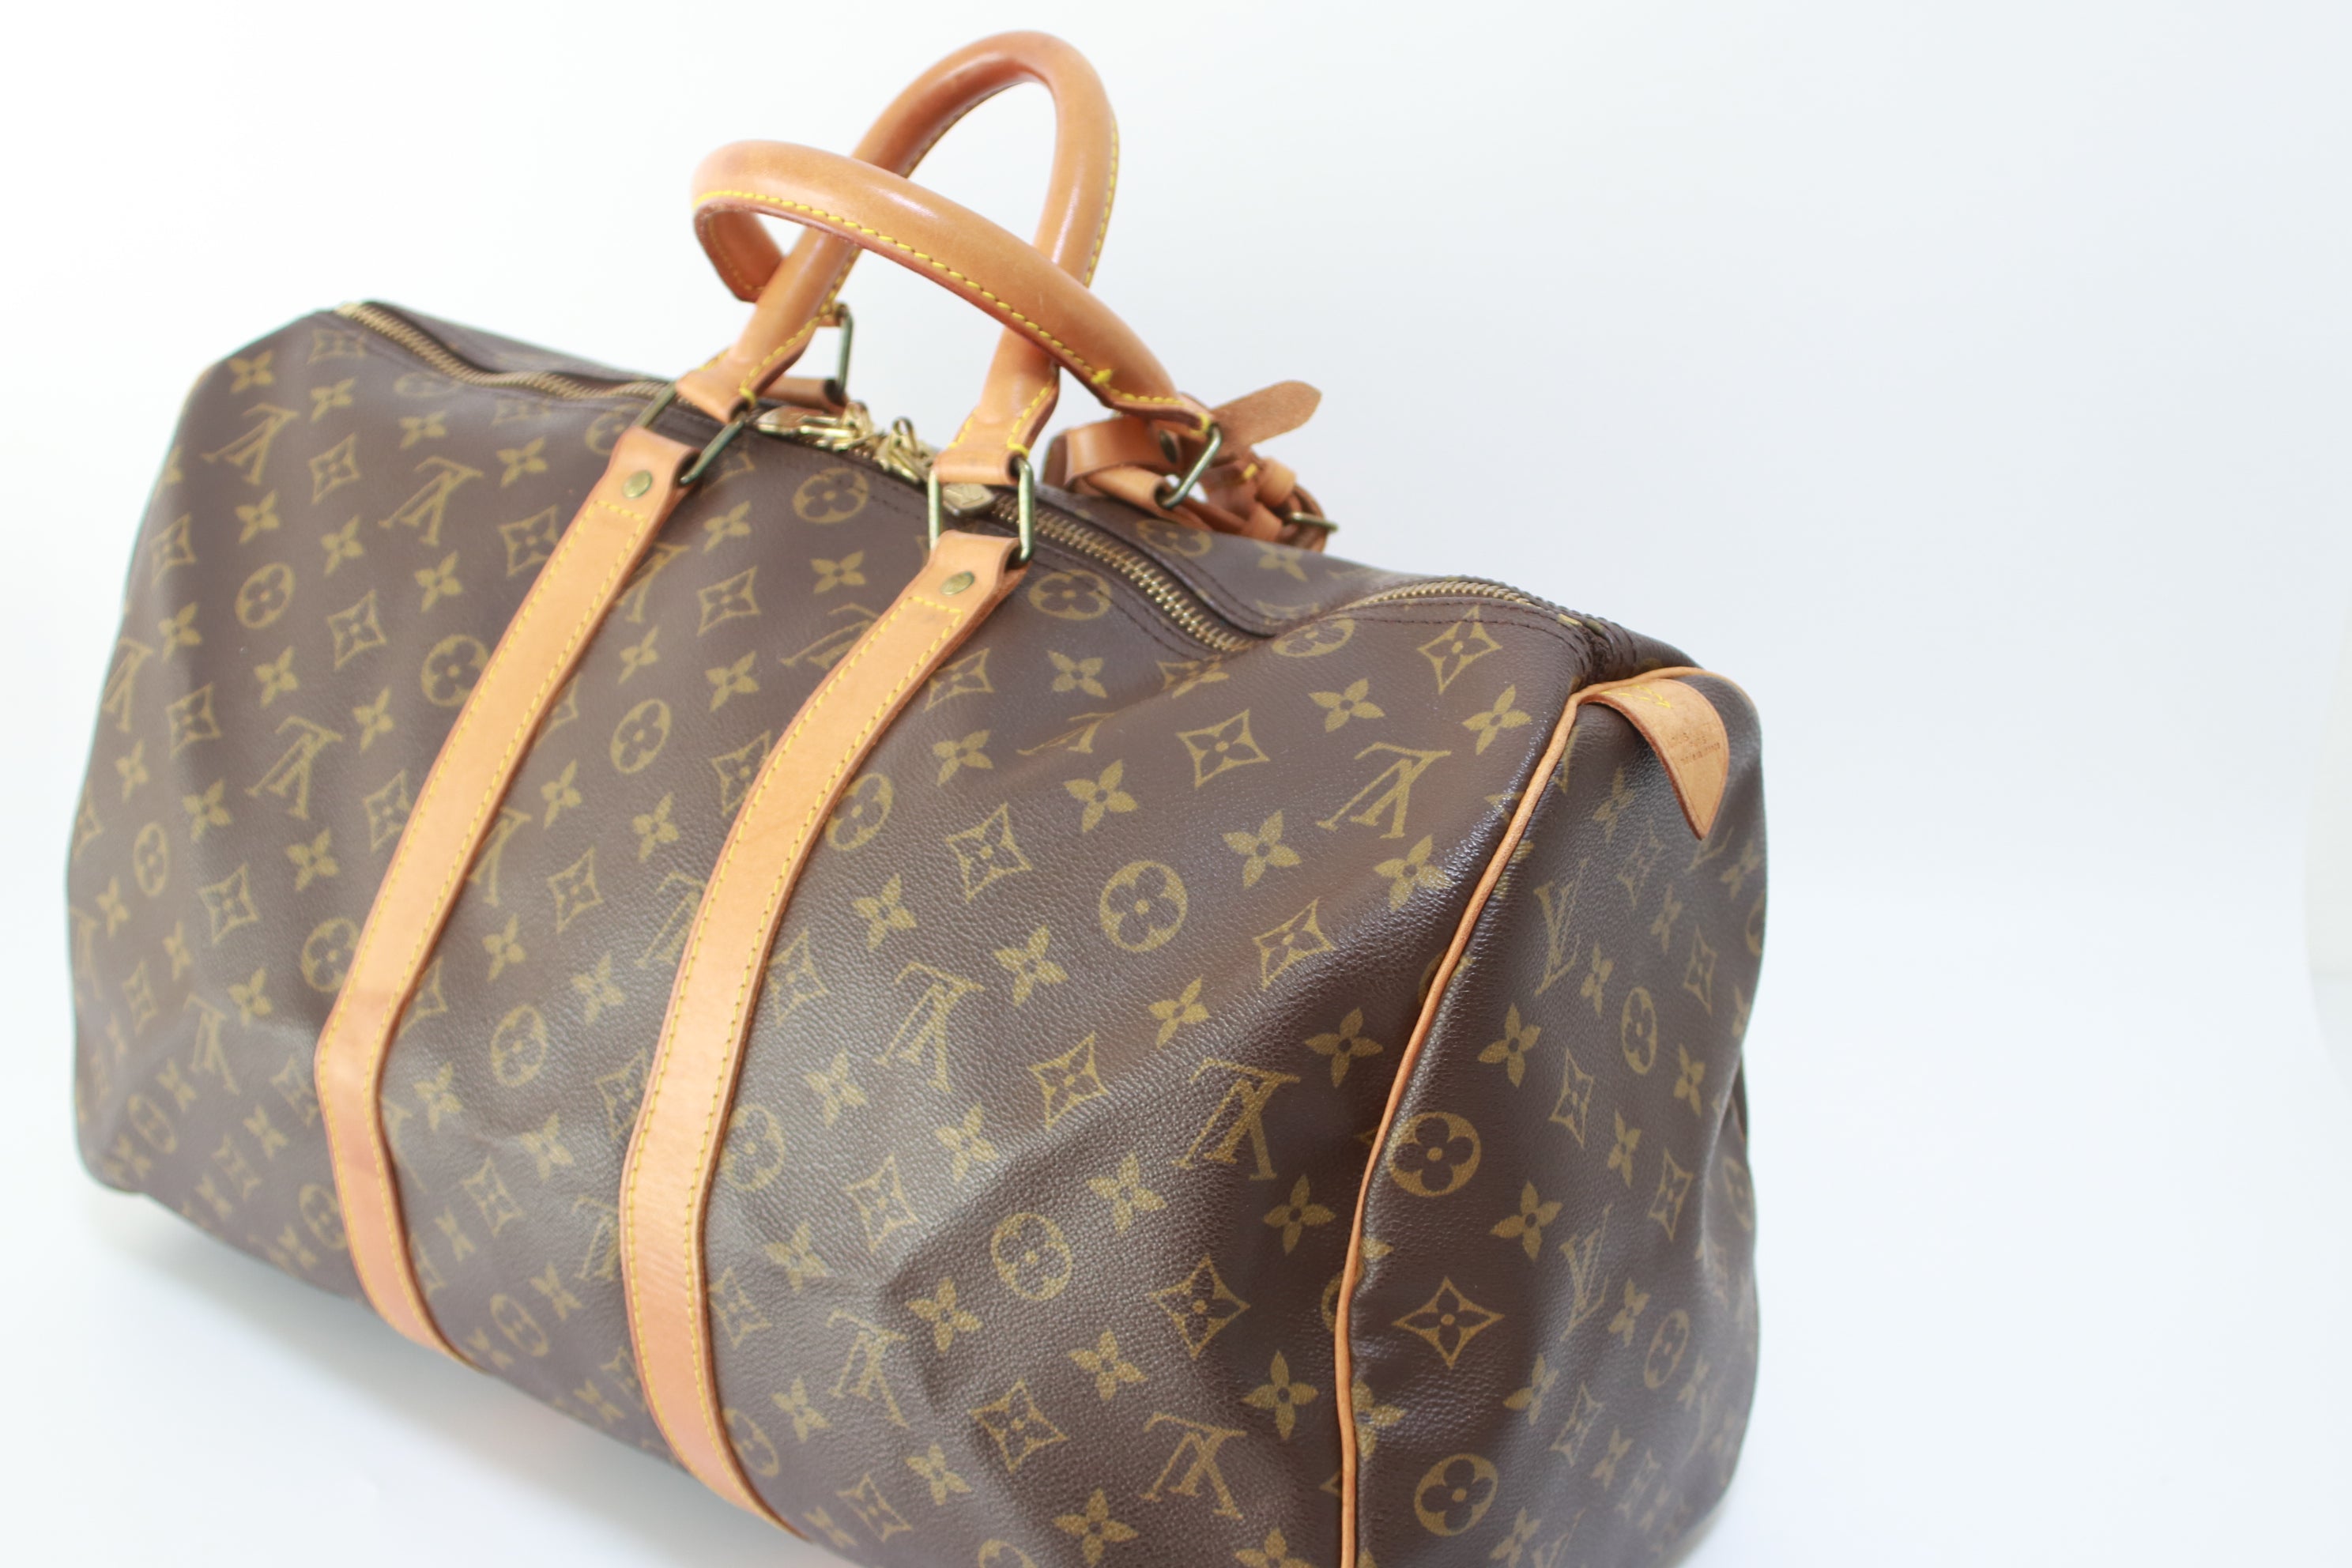 Louis Vuitton Keepall 45 Duffle Bag Used (7180)